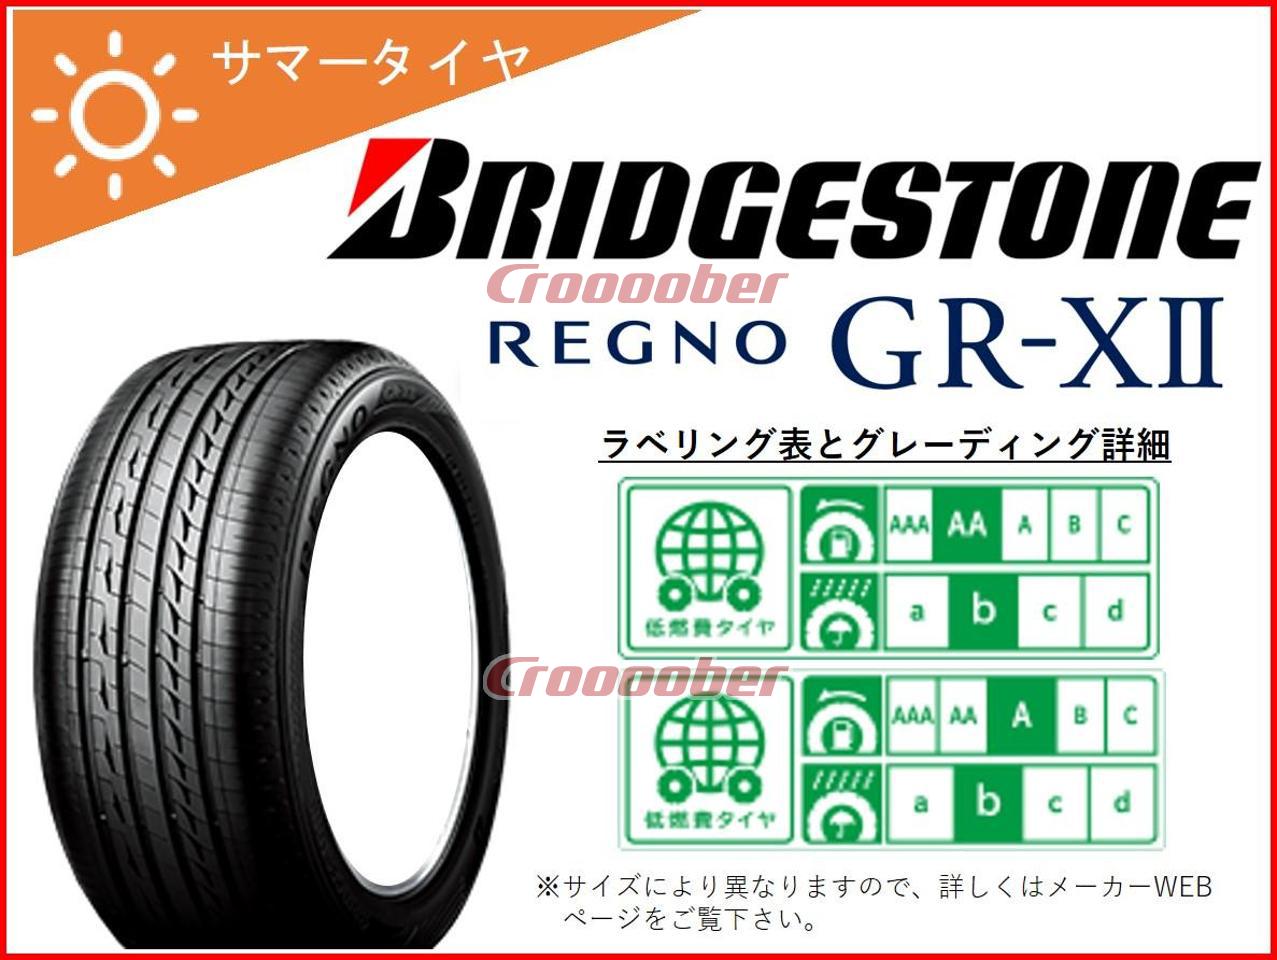 Bridgestone Regno GR-XII 225 / 40R19 89W [PSR07823] | 19 Inch Tire